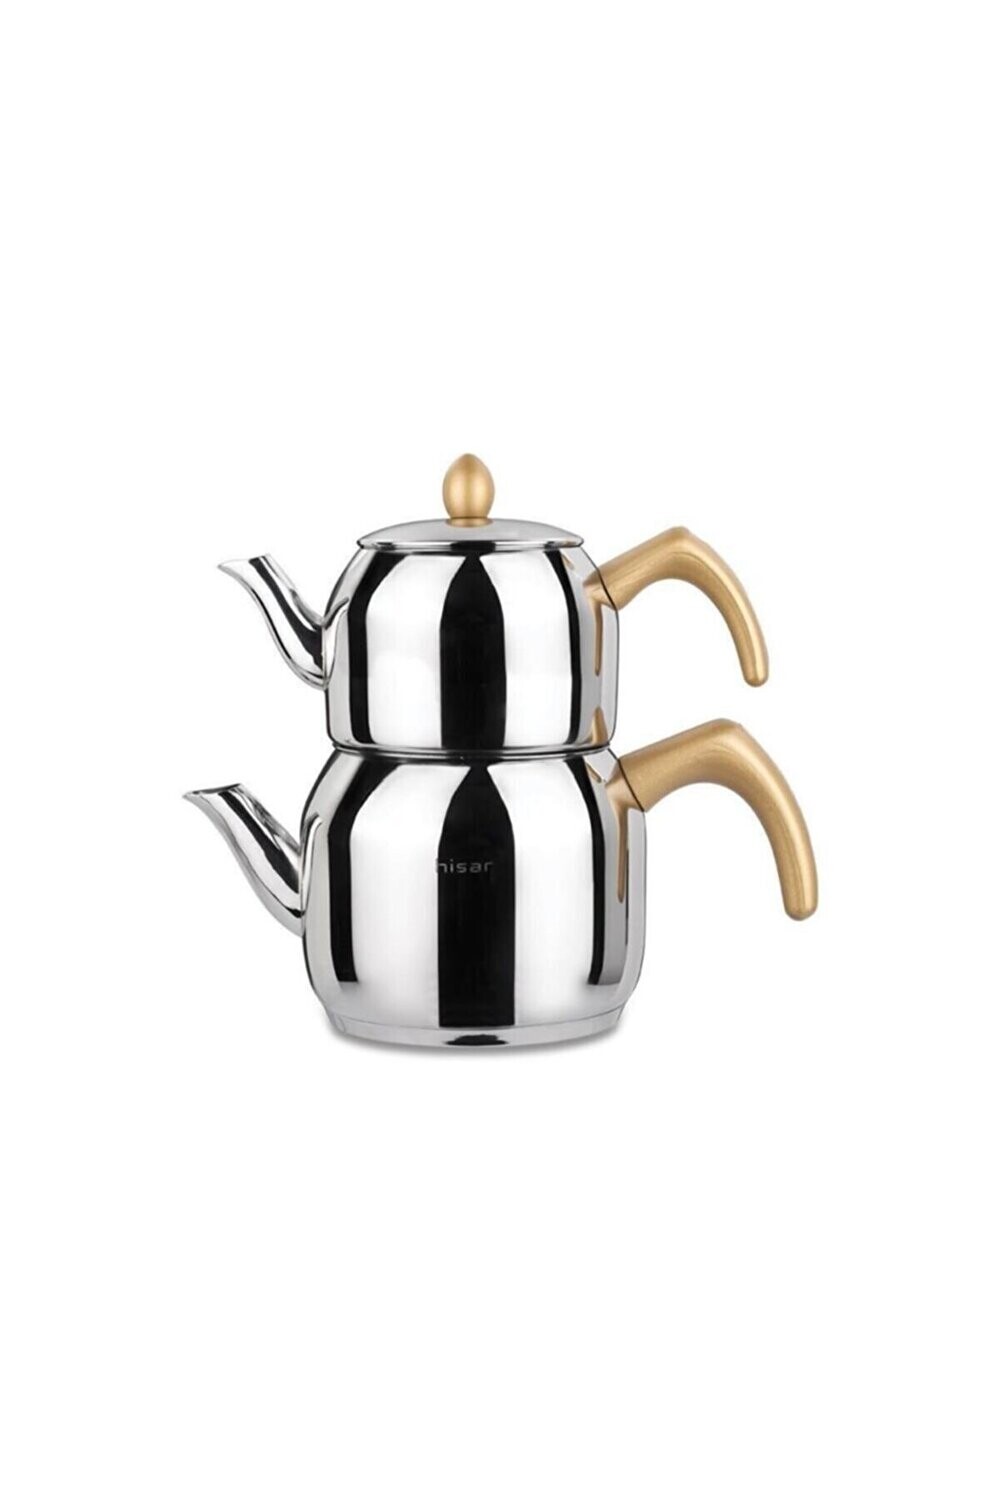 HISAR Bahama Gold Tea Pot - Teapots - Caydanlik Set